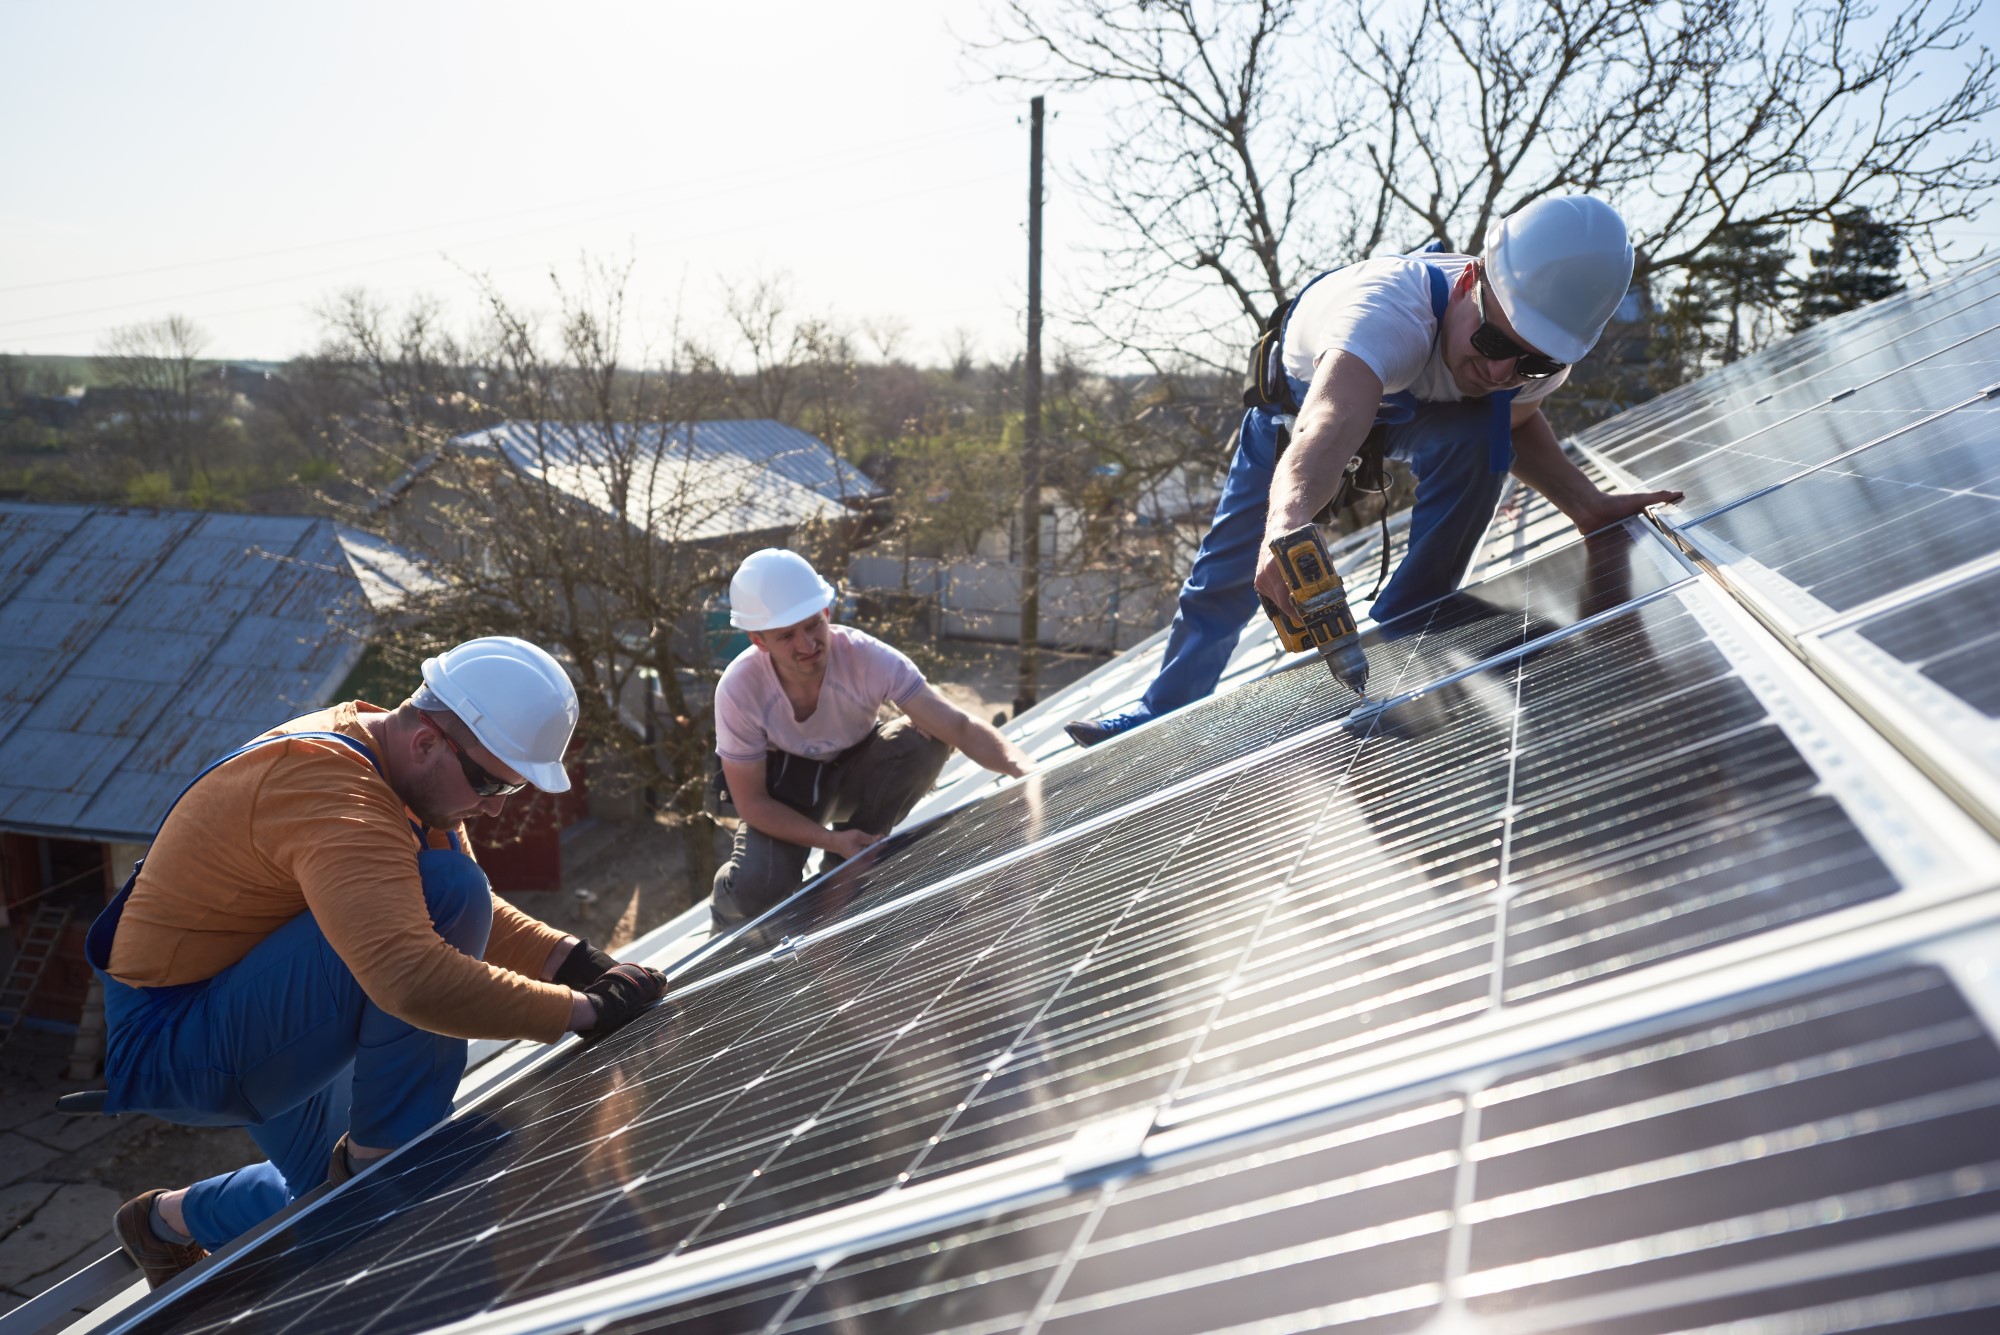 installing solar photovoltaic panel system on roof 2022 05 16 16 05 02 utc